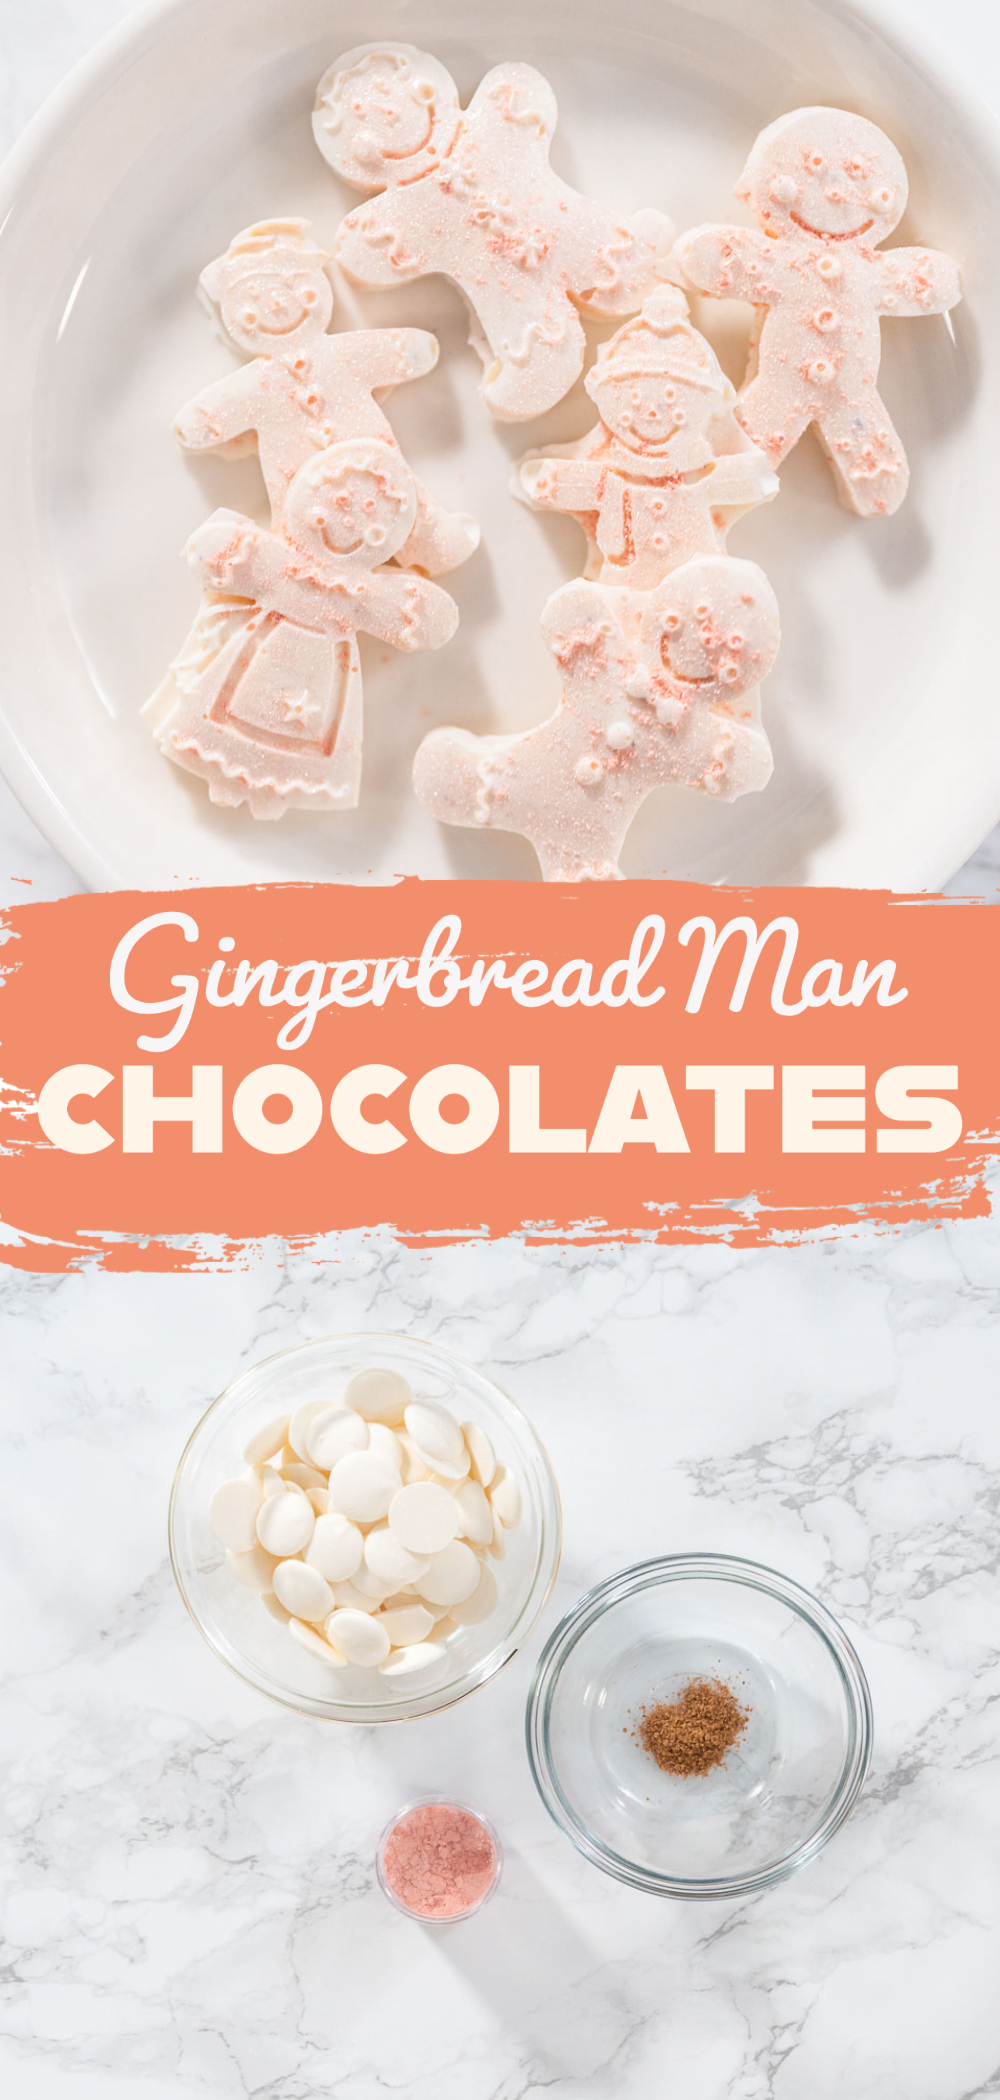 Gingerbread Man Chocolates